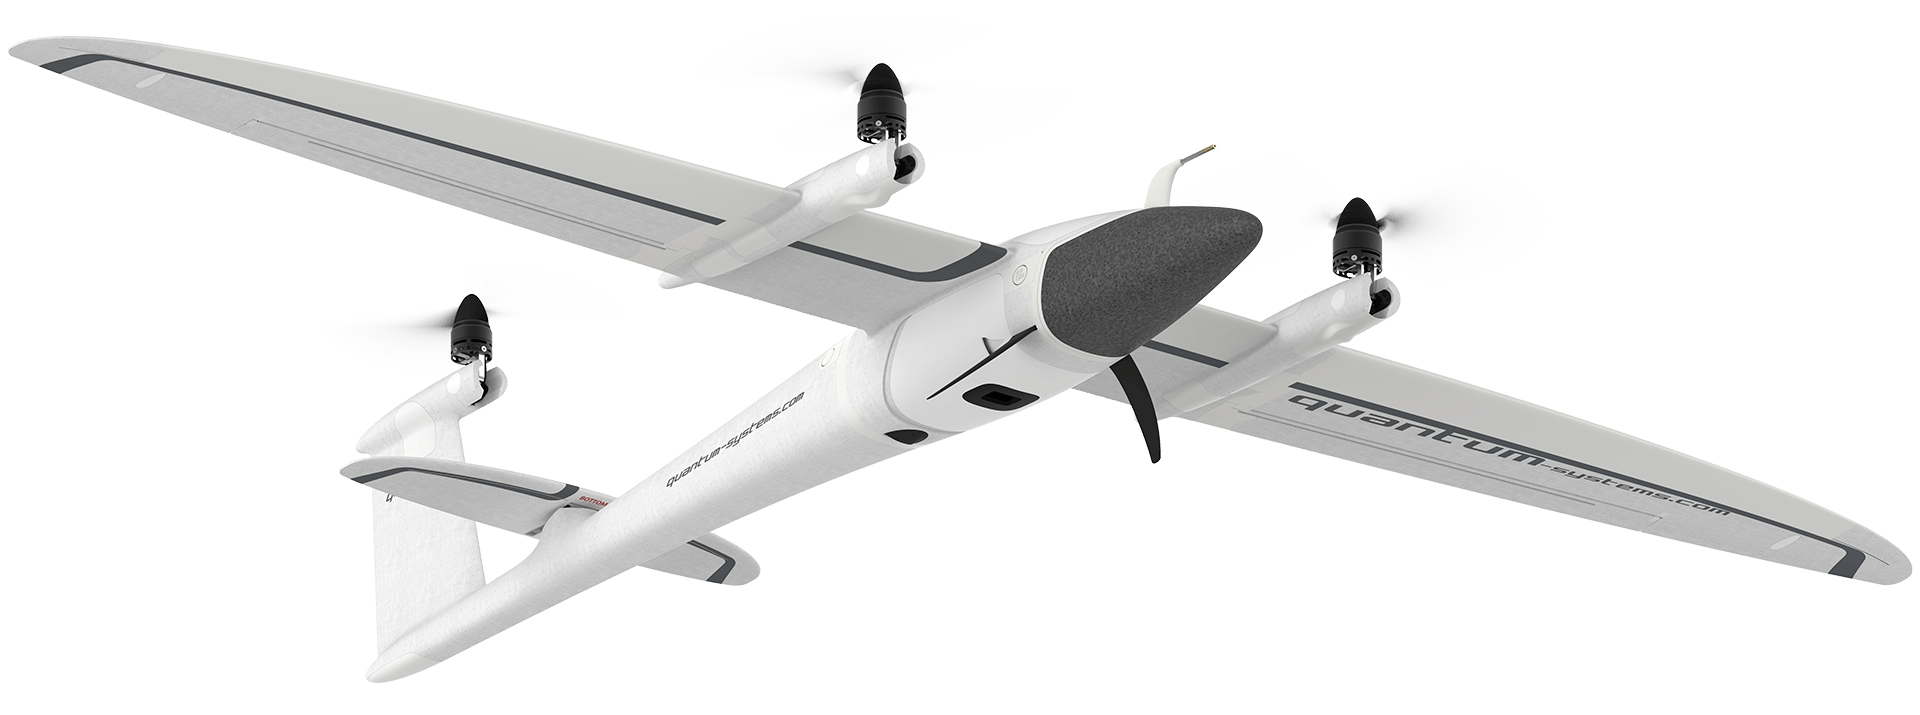 Trinity F90+1 eVTOL drone